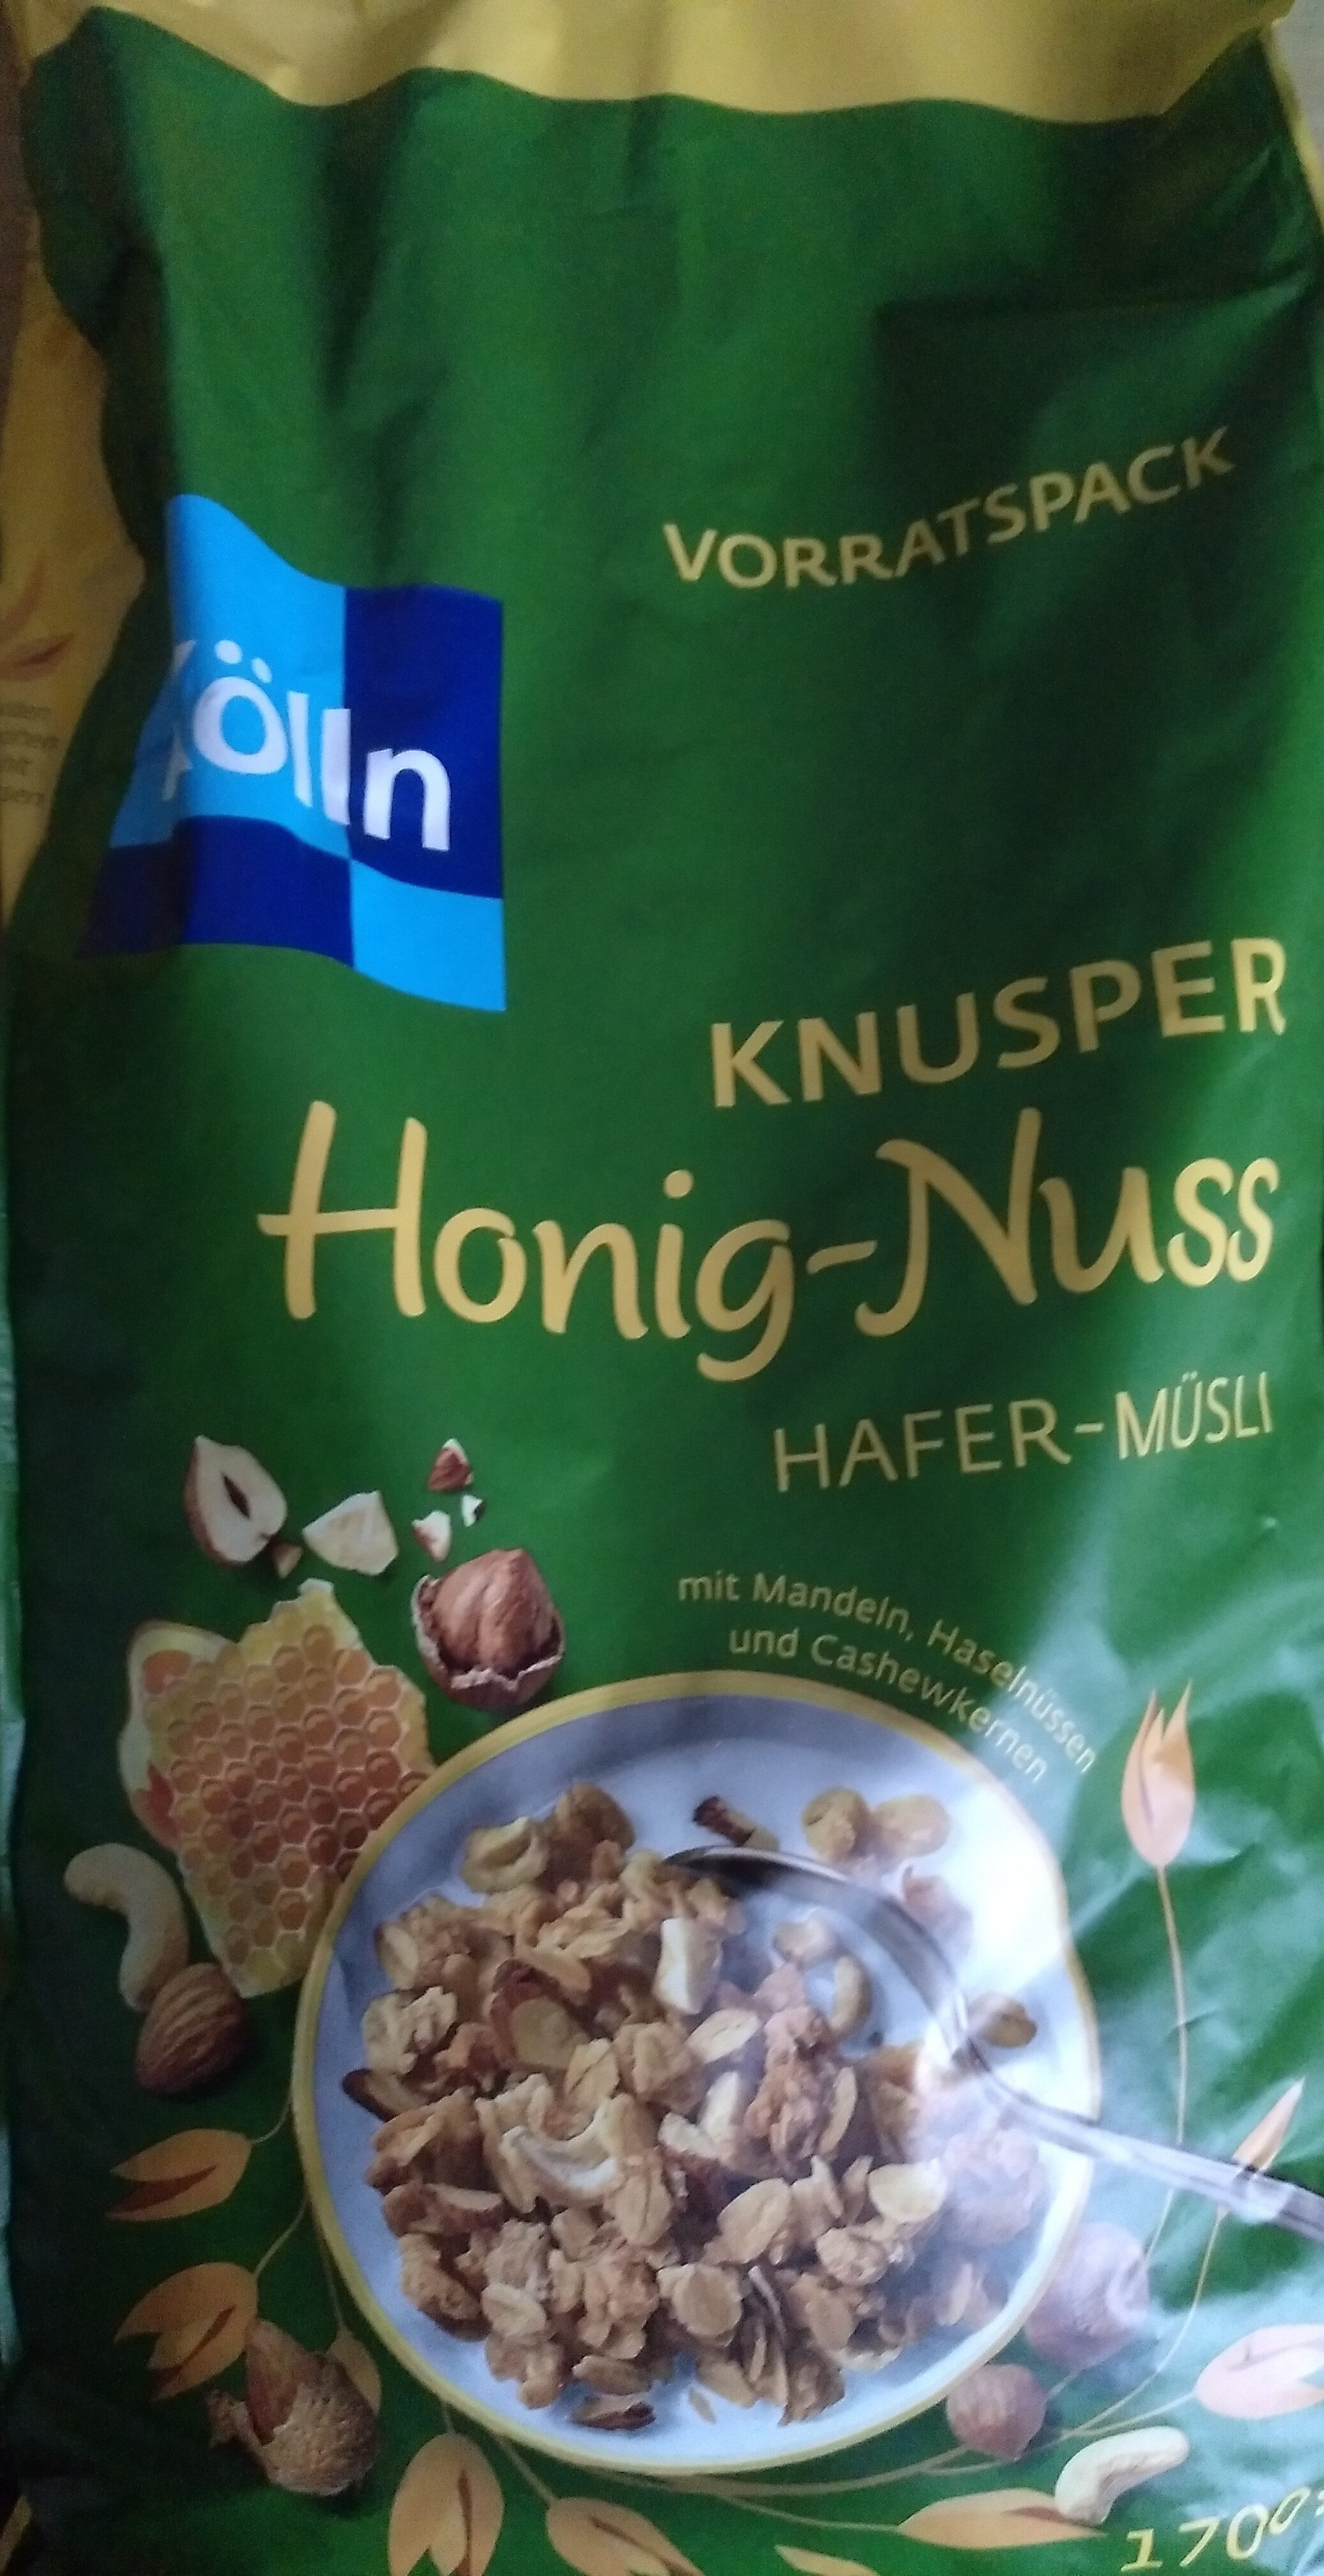 Knusper Honig-Nuss Hafer-Müsli - Product - de